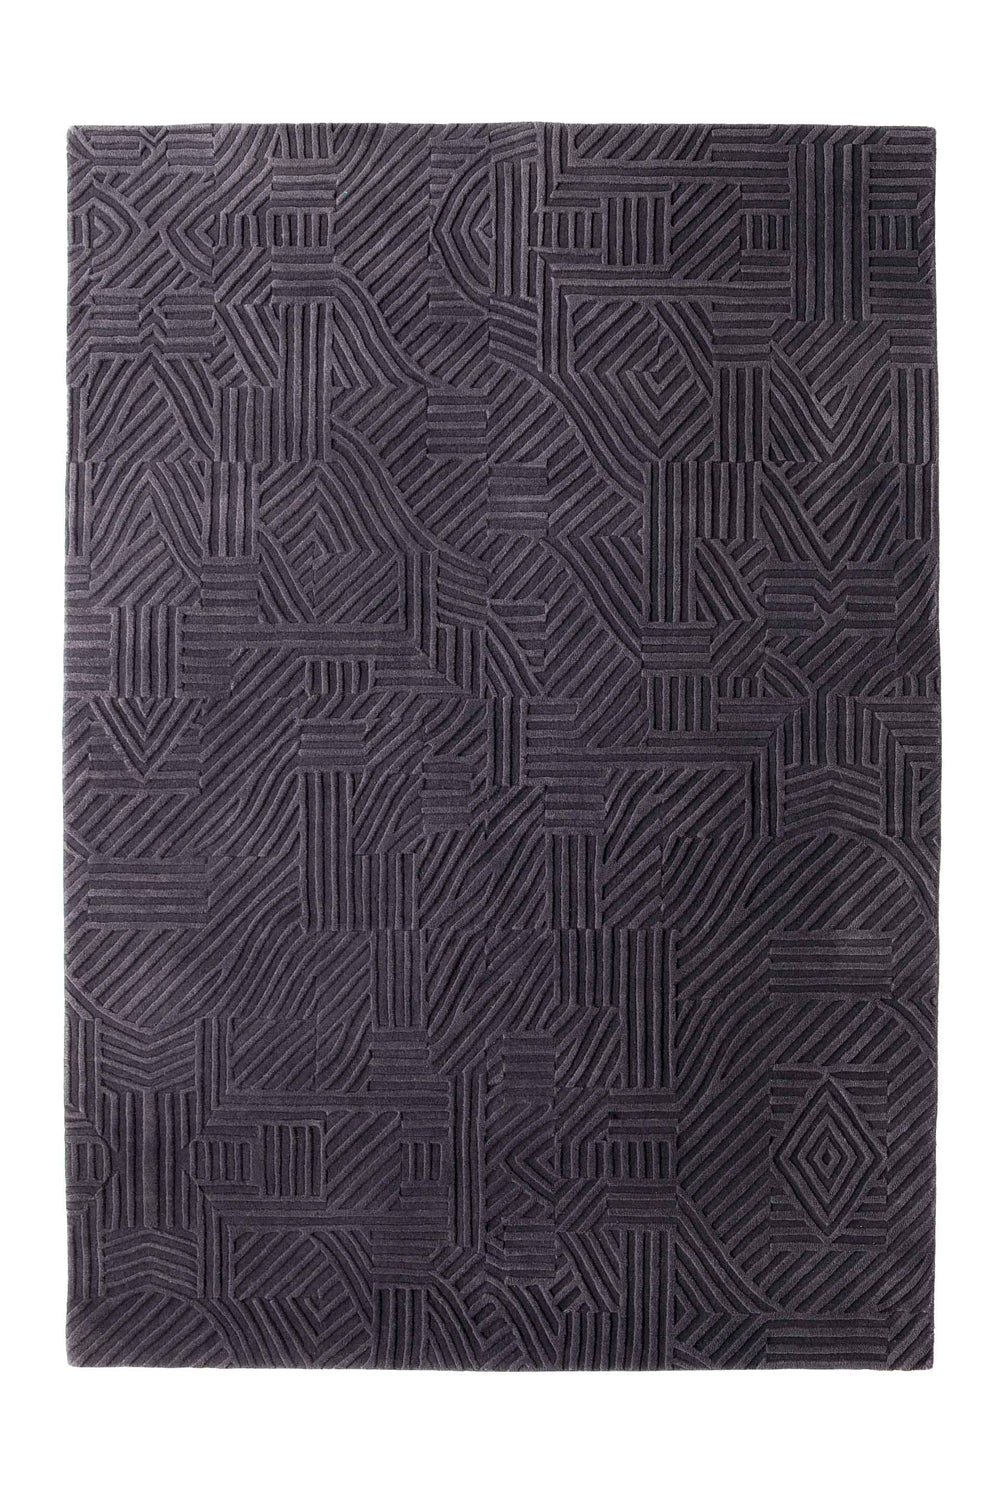 Milton Glaser African Pattern 1 Rug